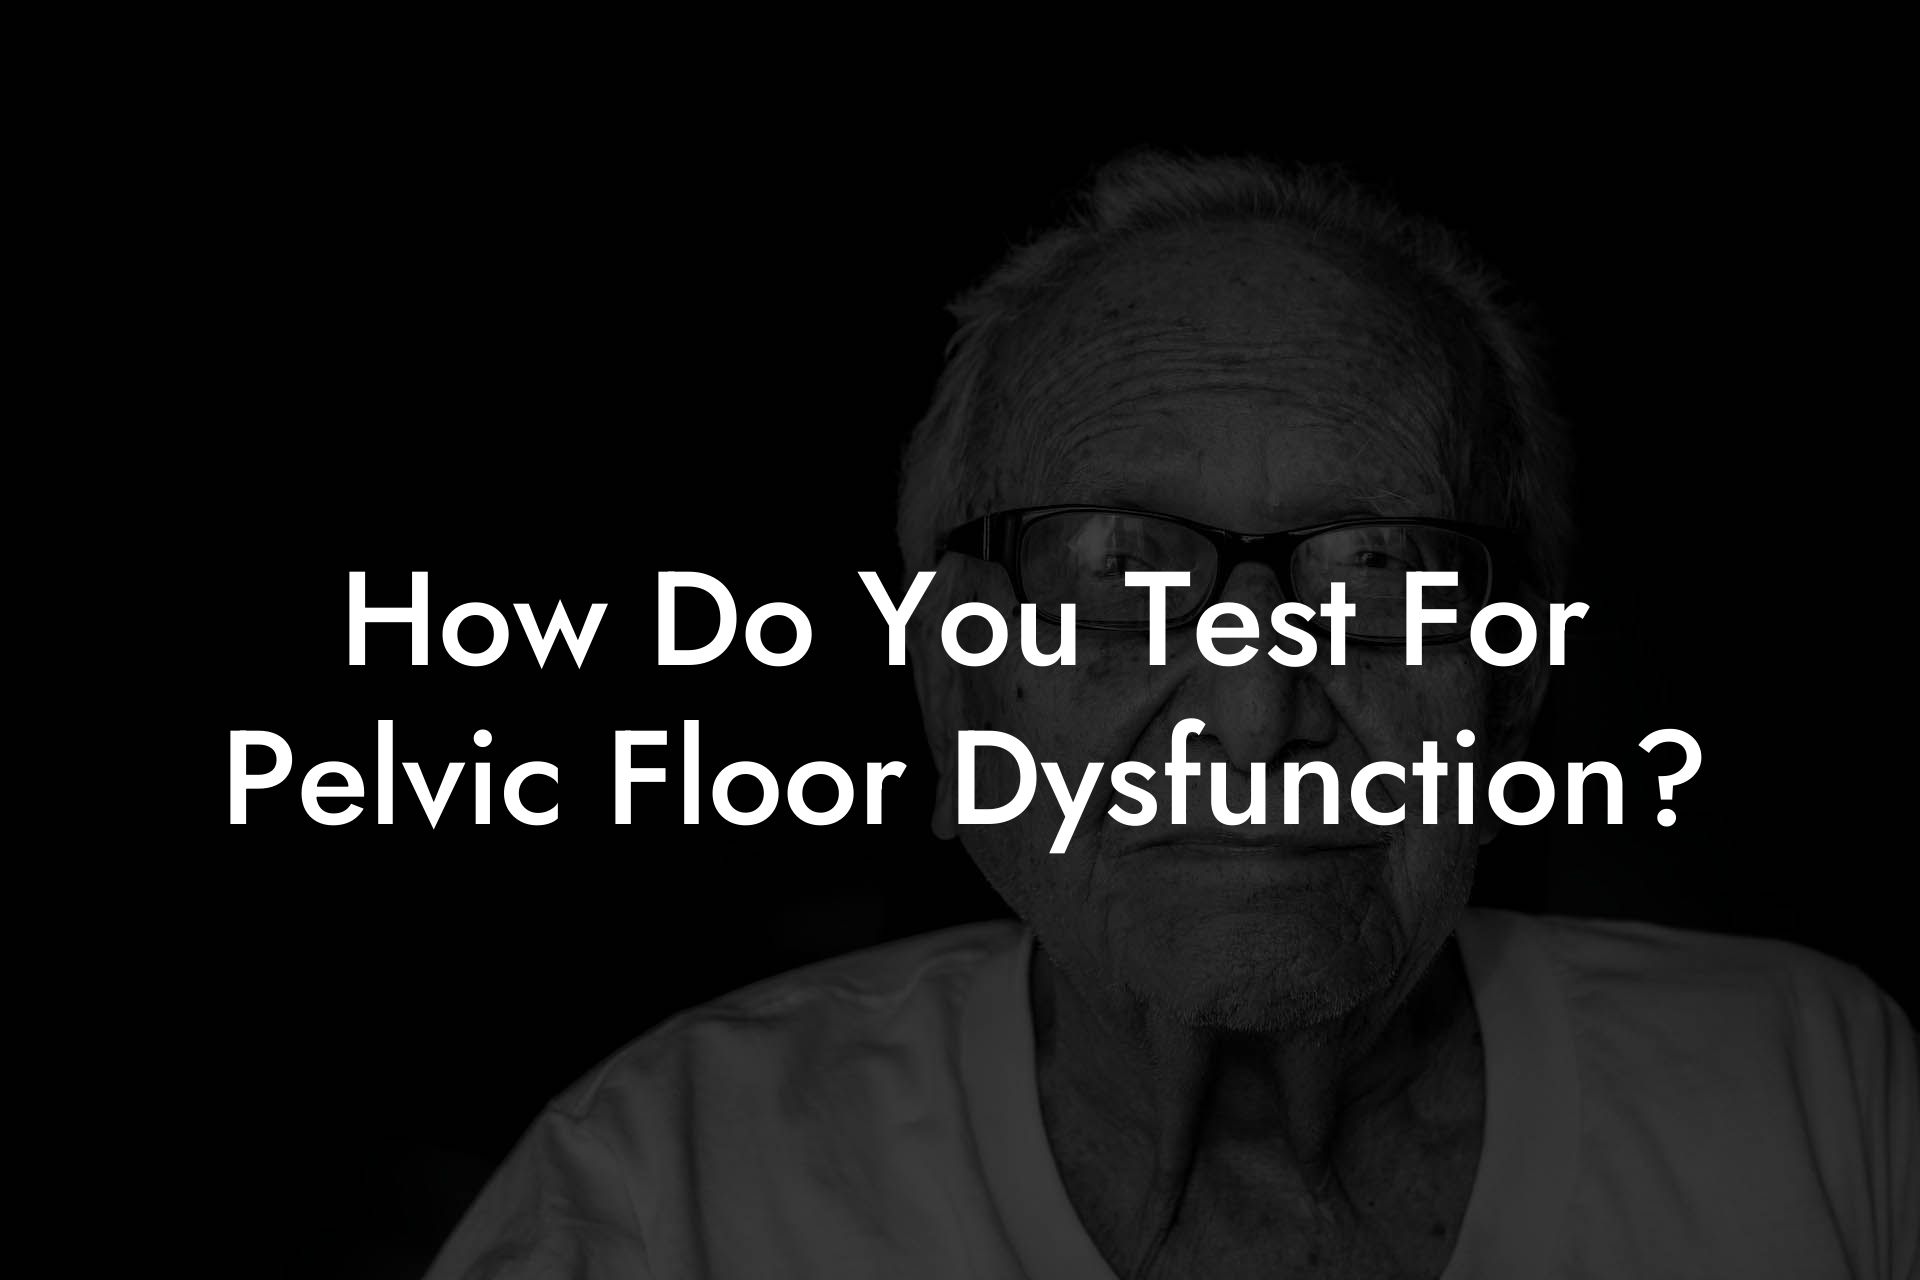 How Do You Test For Pelvic Floor Dysfunction?